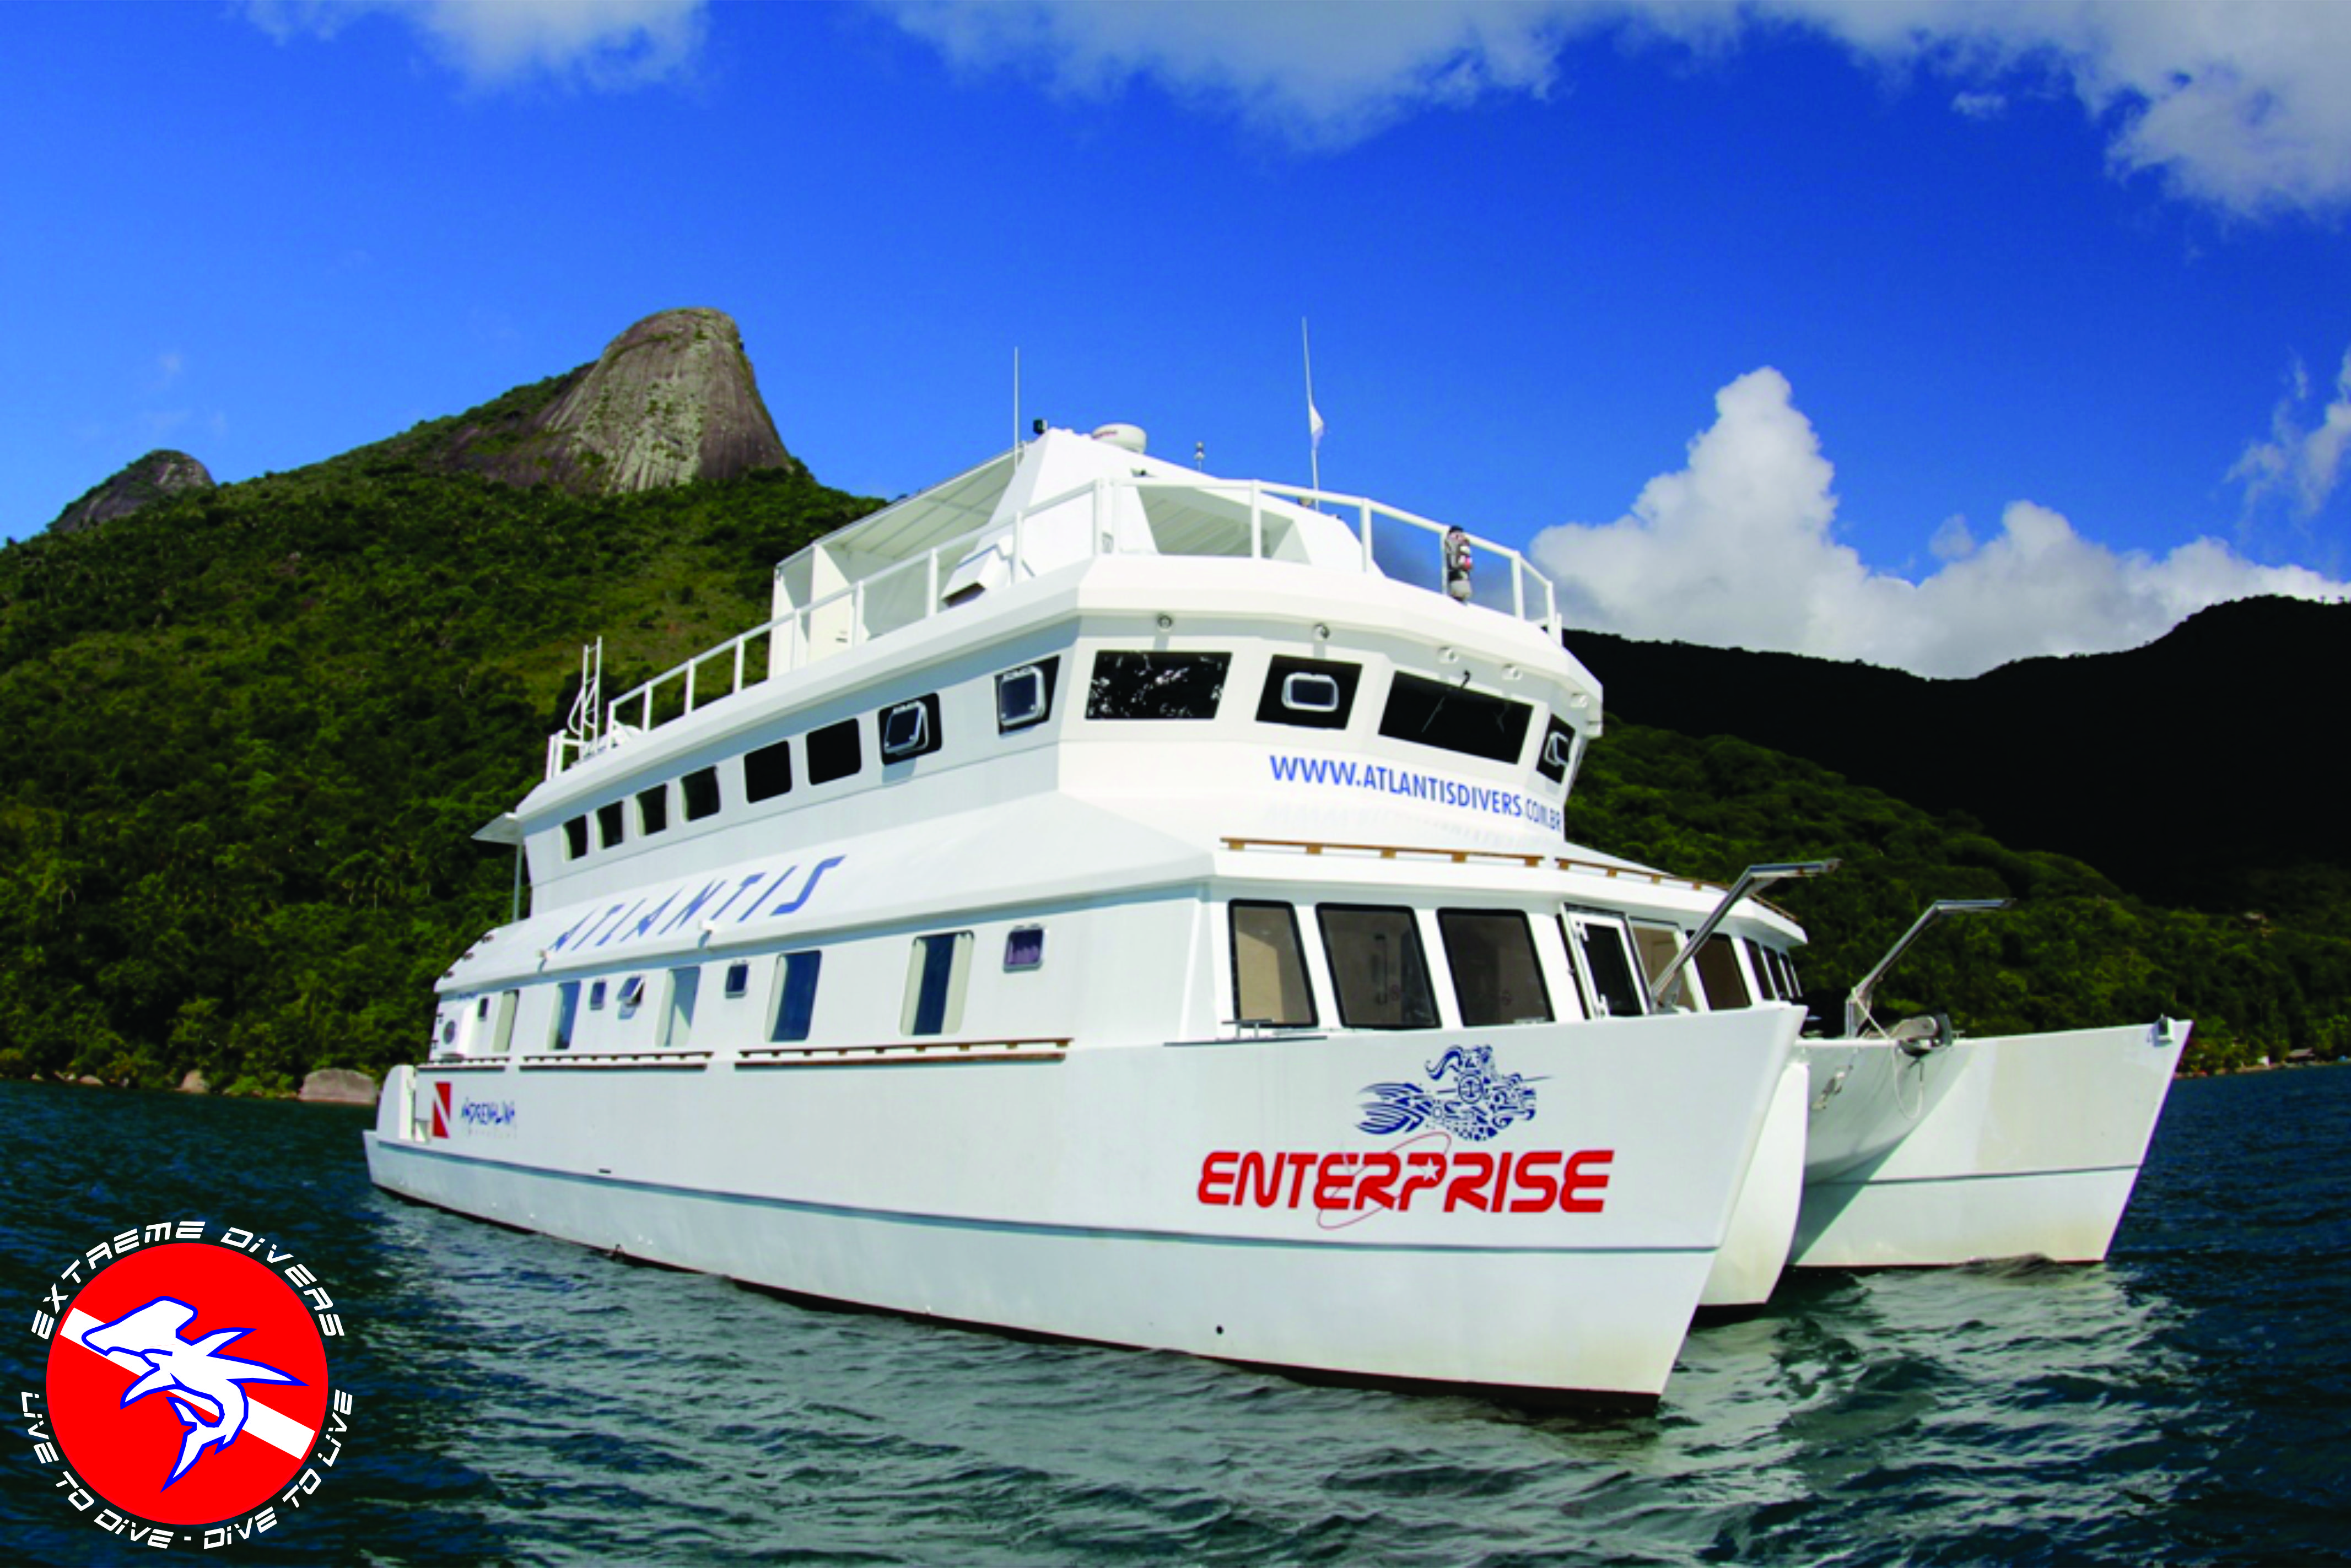 Live Aboard Enterprise XXII – Reserva Exclusiva parcelado em até 8x – 6 e 7 de Dezembro de 2014  – Até 8 Mergulhos!!!